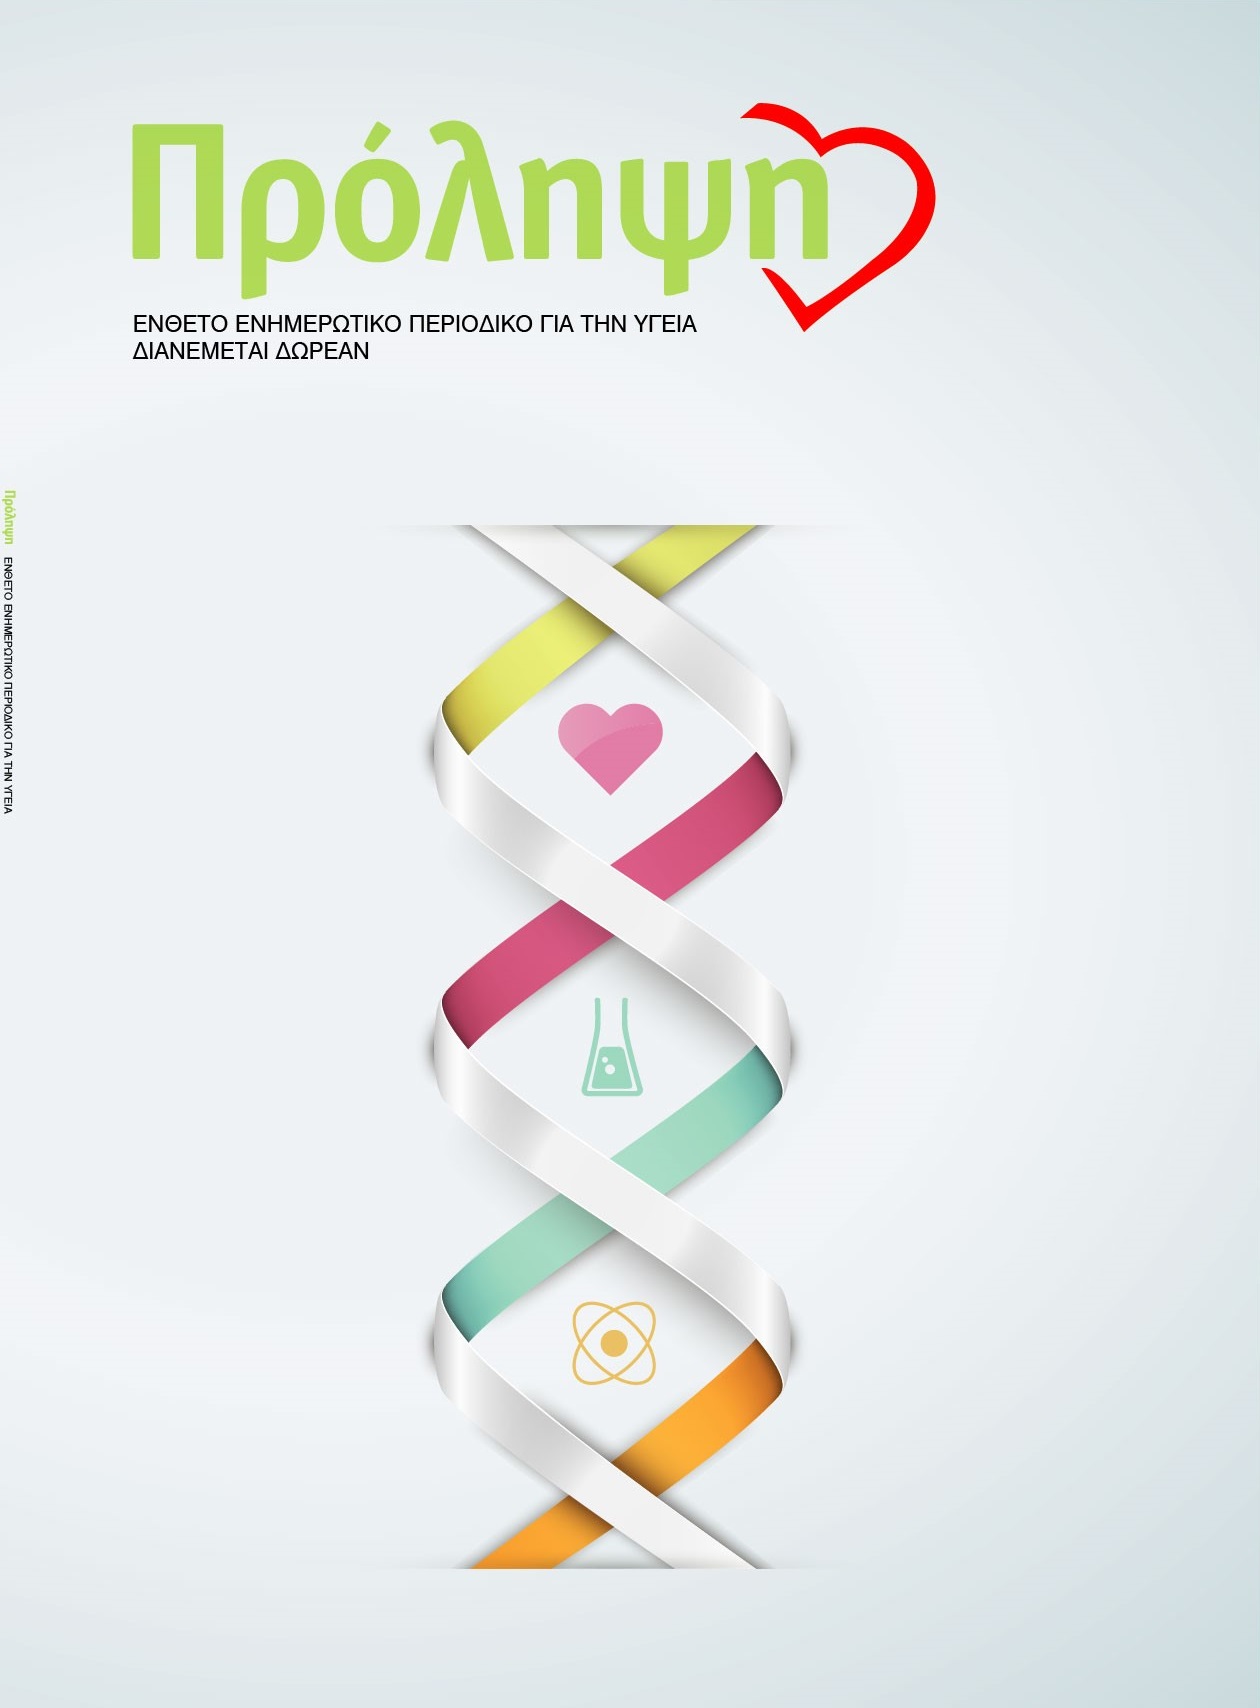 prevention magazine logo